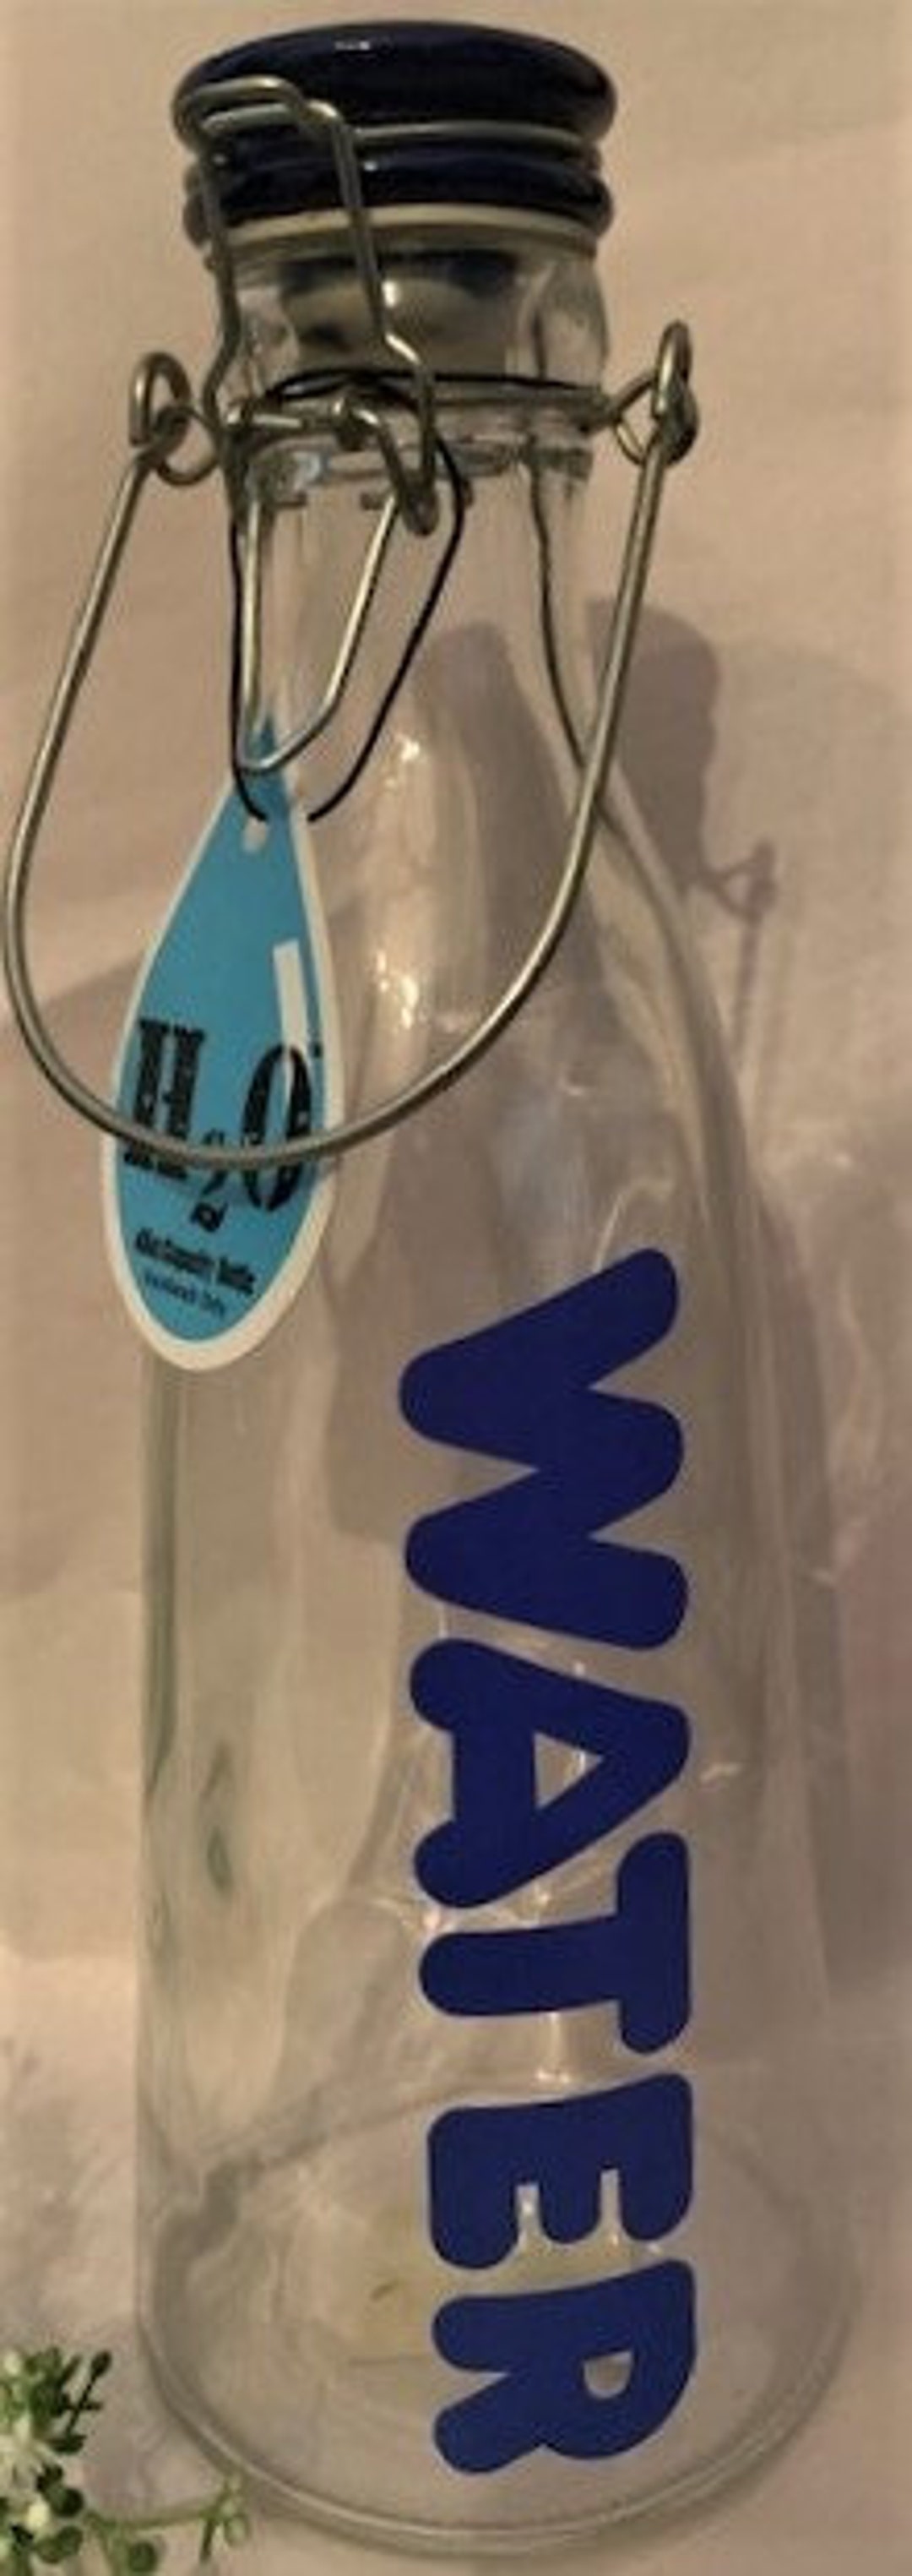 Transparent Glass Water Jug